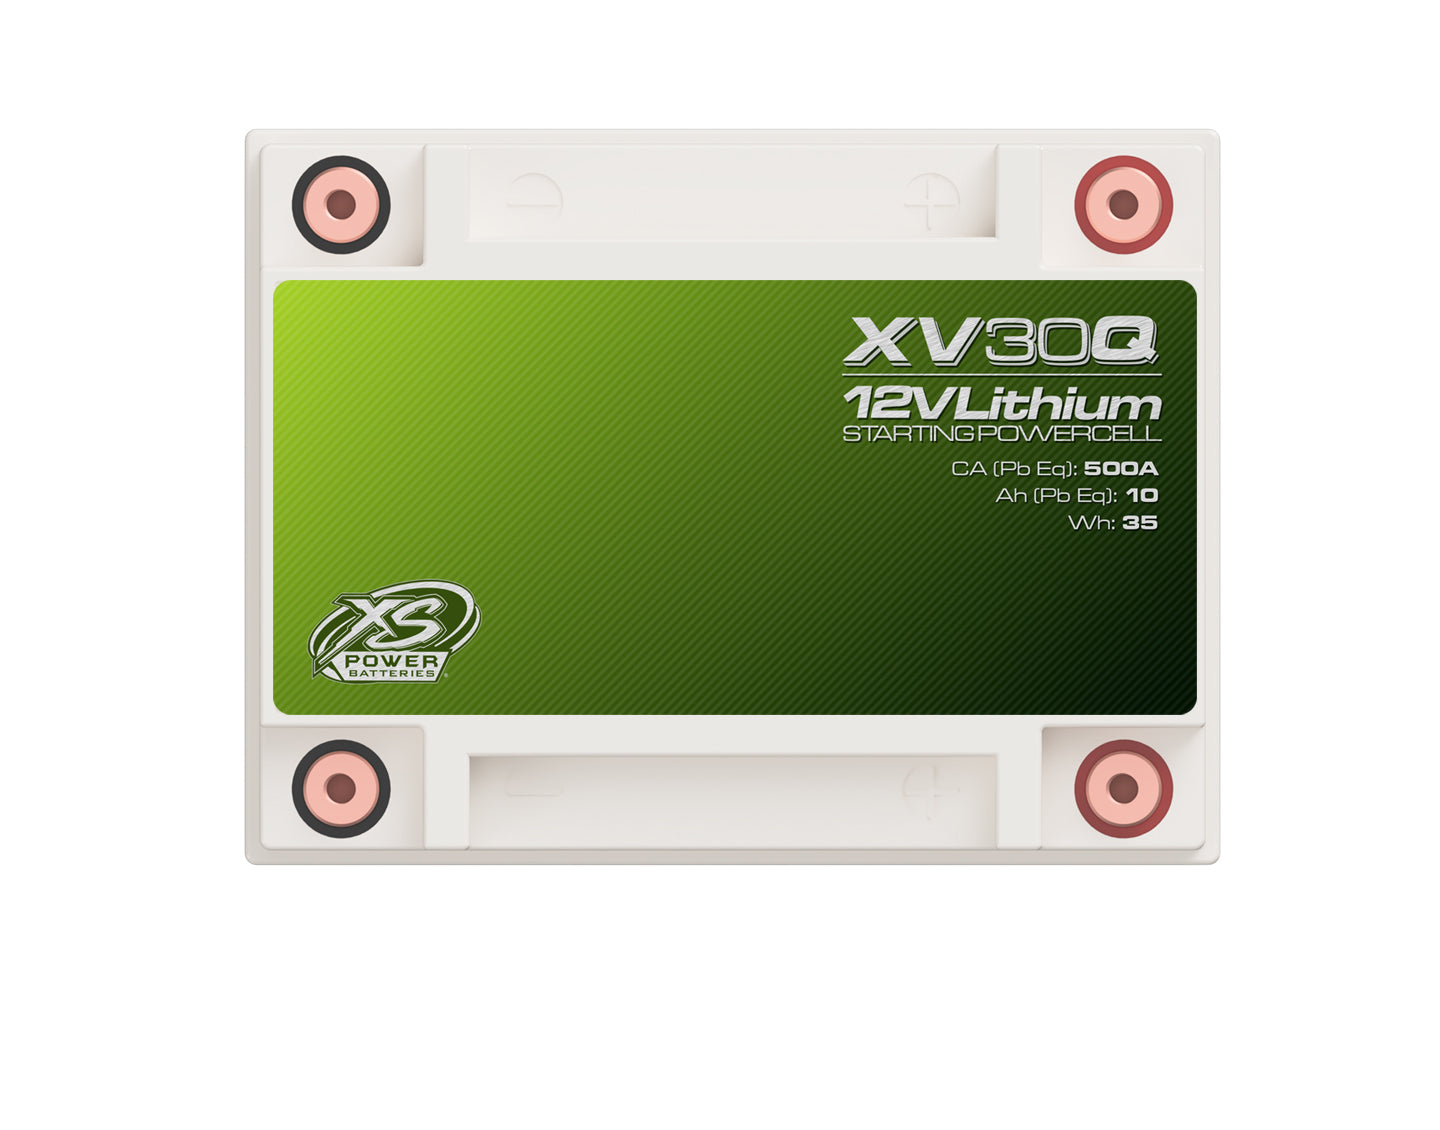 XV30Q XS Power 12VDC Group 30L Lithium LTO Underhood-Safe Vehicle Battery 750W 35Wh